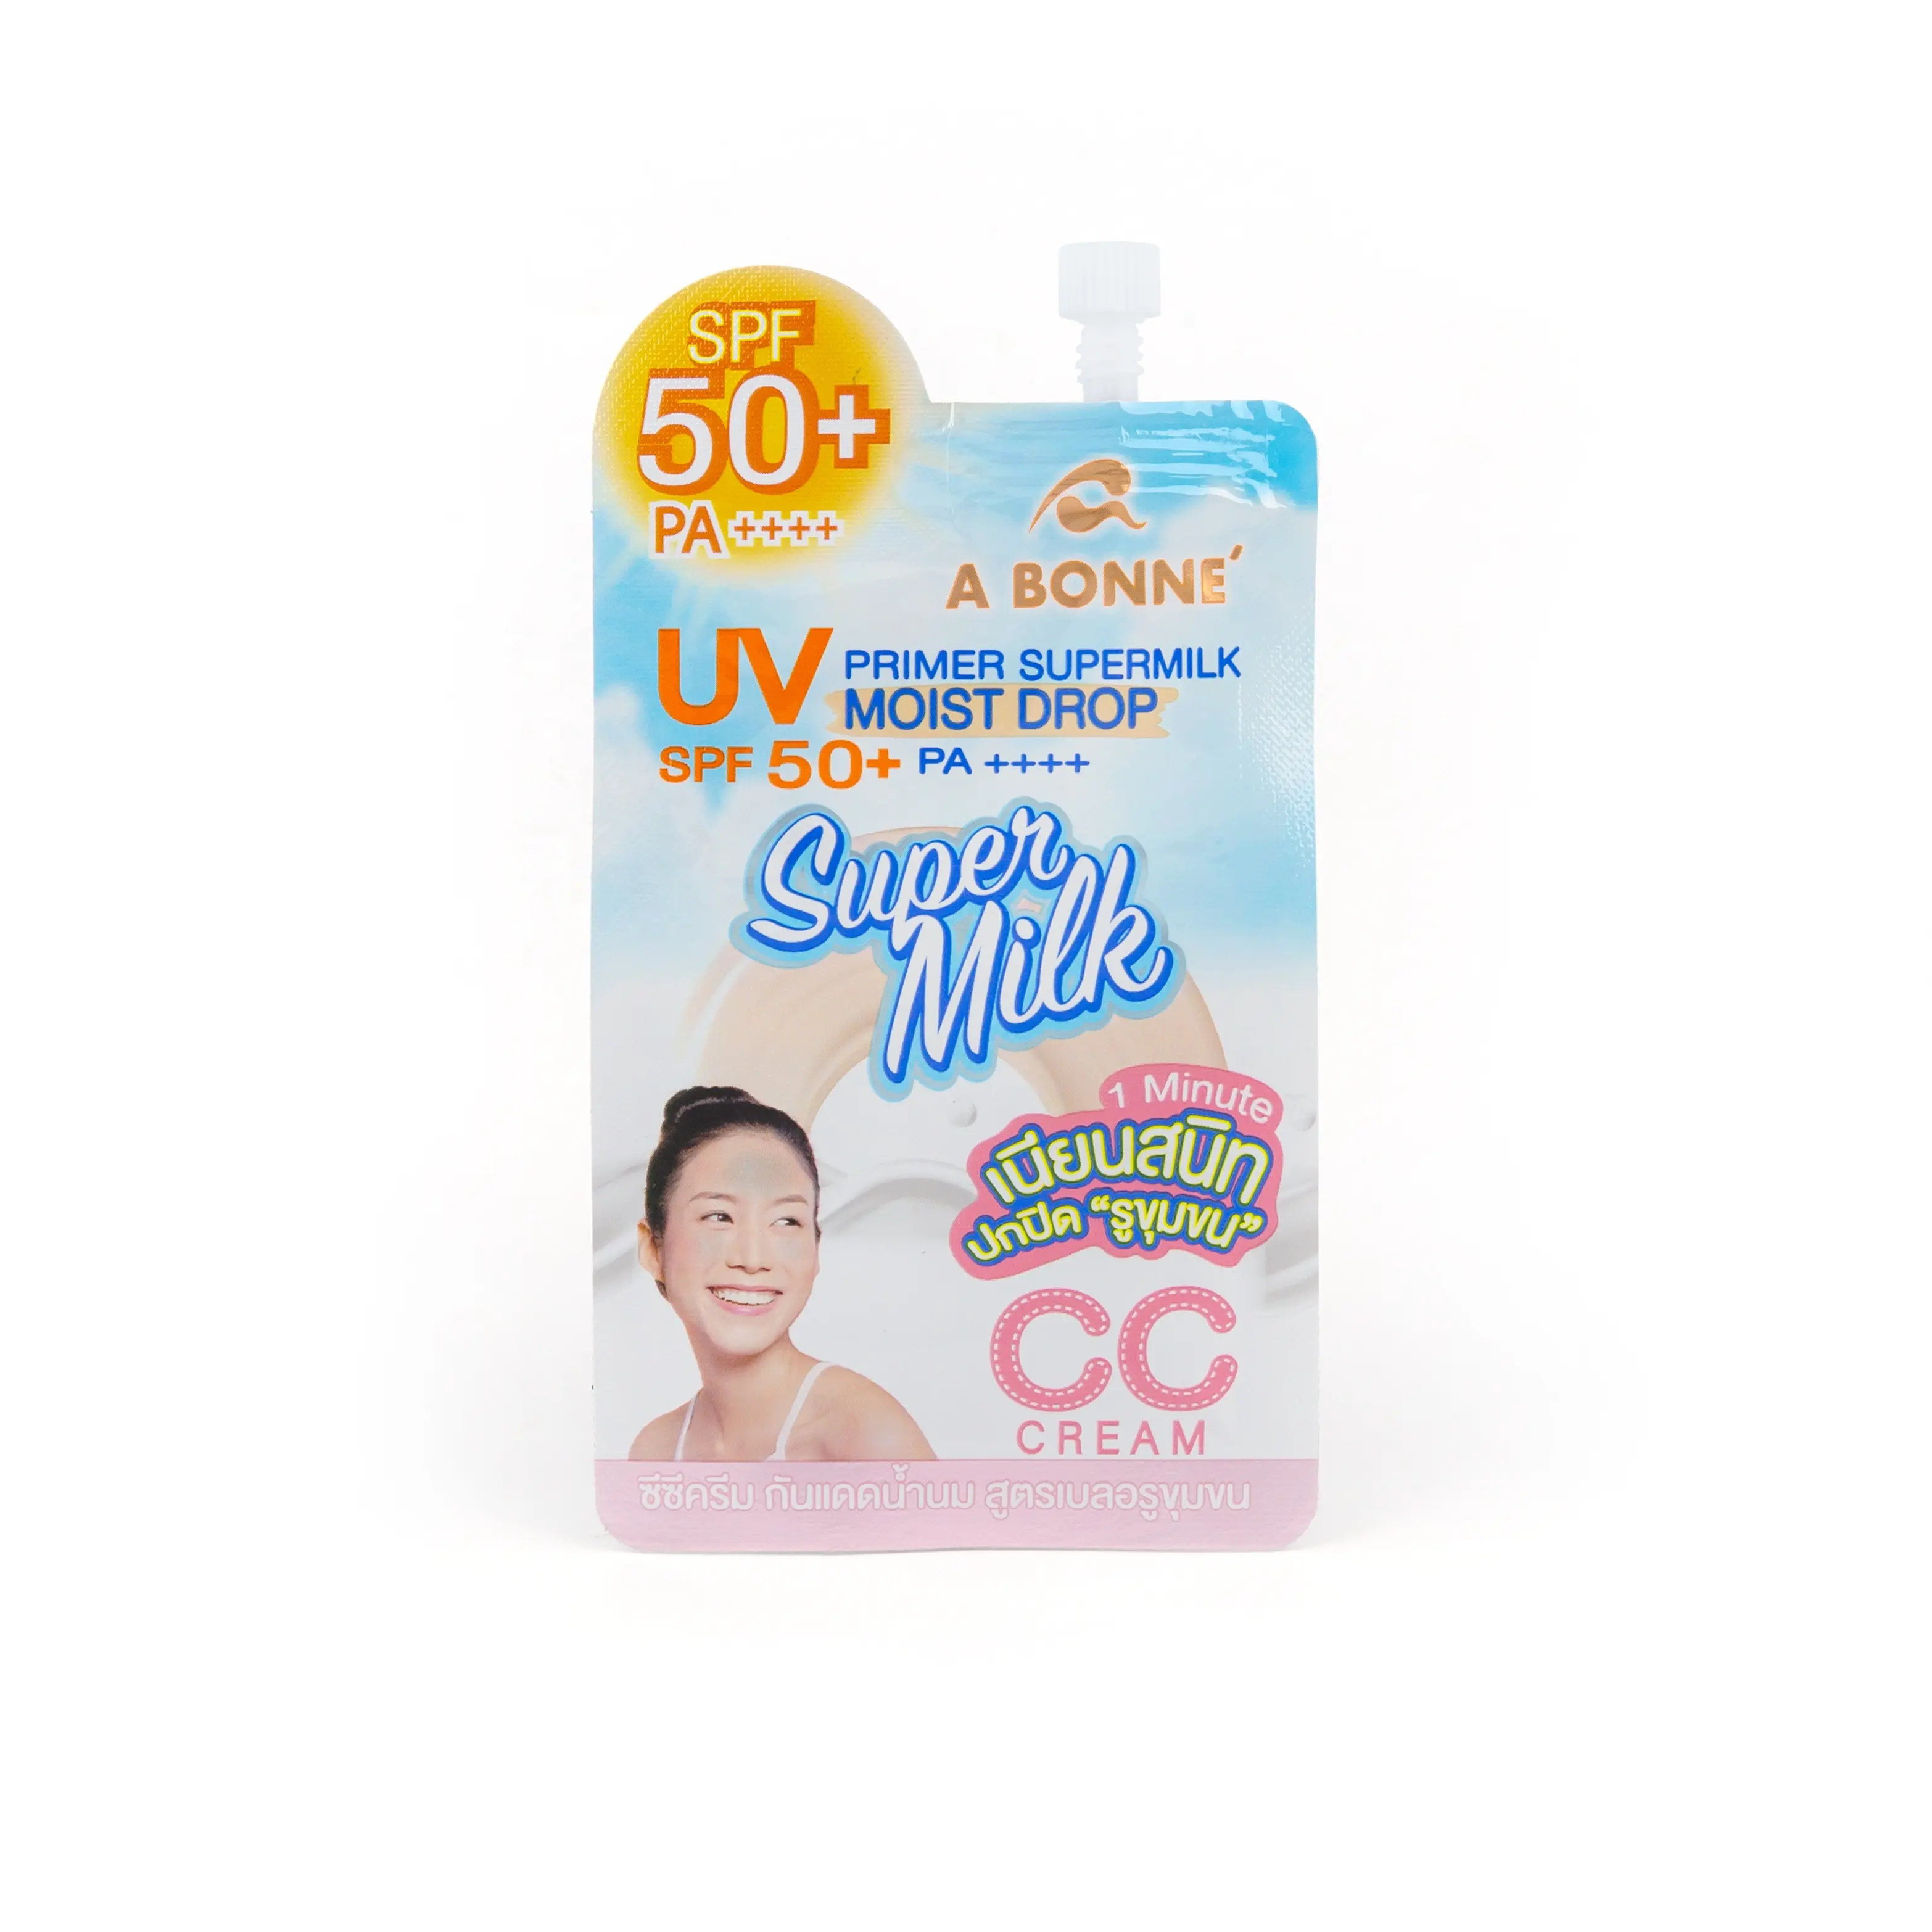 सीसी क्रीम सुपर दूध प्राइमर Supermilk नम ड्रॉप यूवी SPF50 + पीए +++